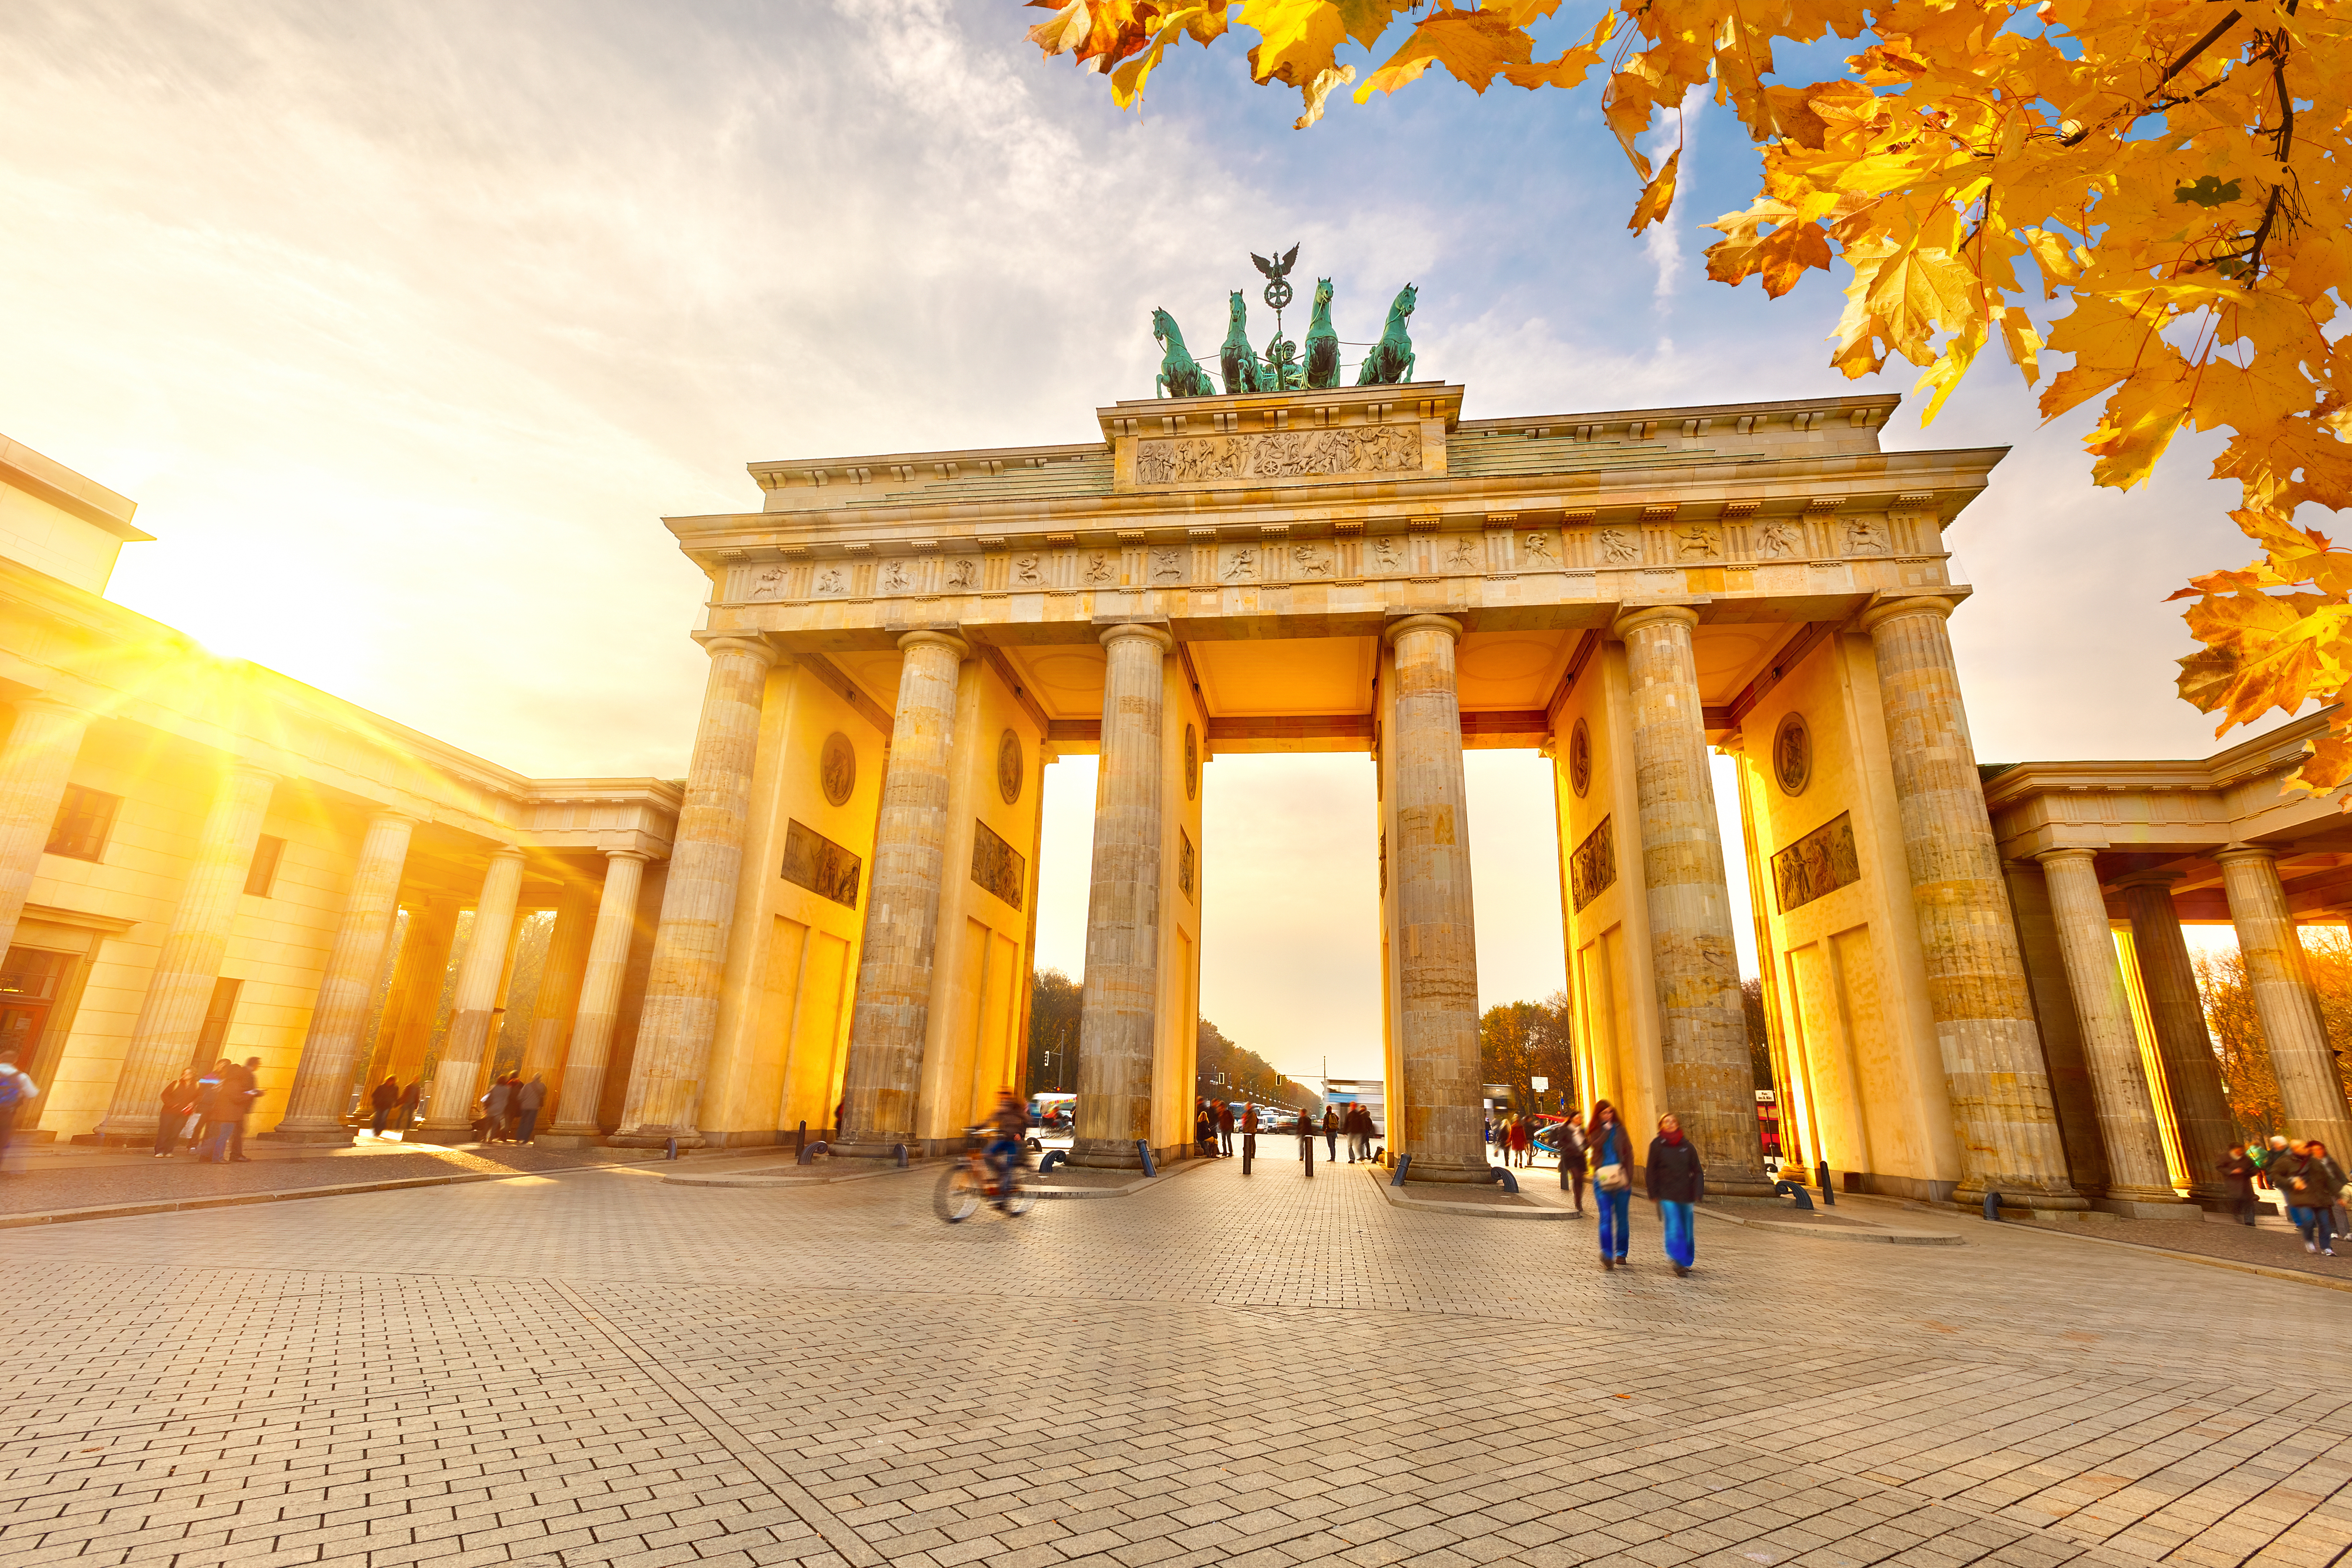 HQ Brandenburg Gate Wallpapers | File 14182.64Kb